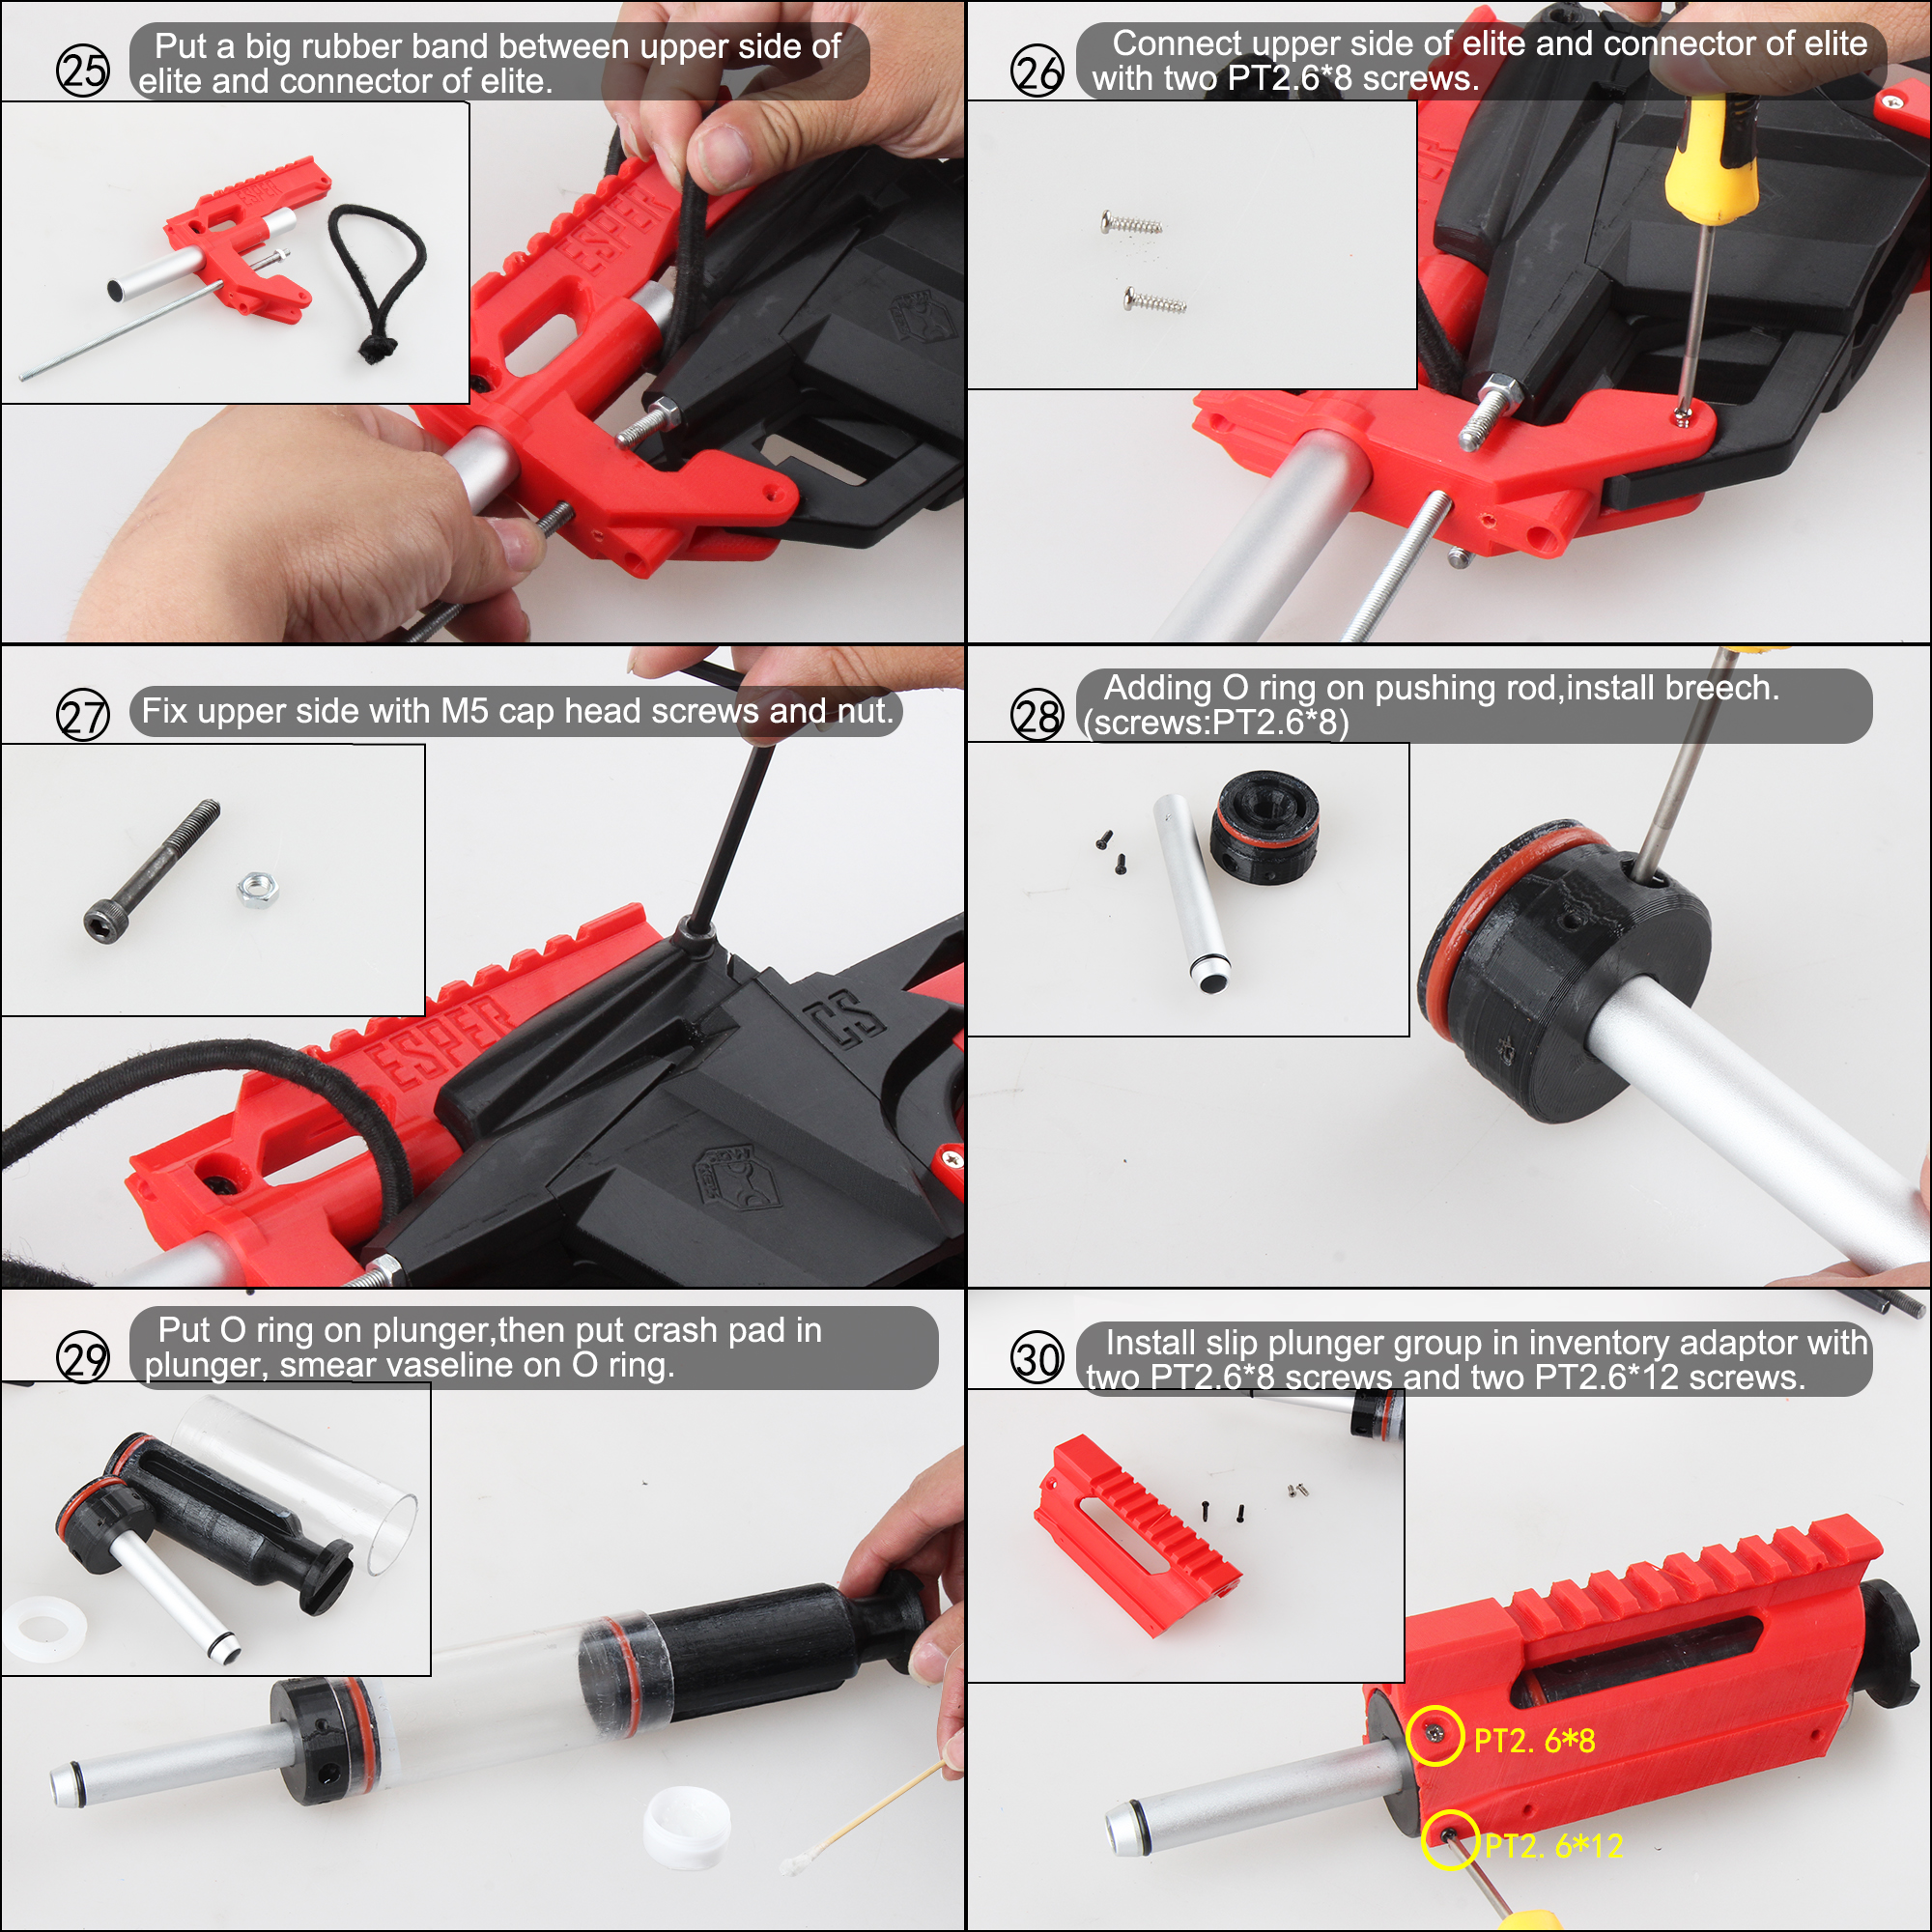 Worker F10555 Esper 3D printed Blaster Model B Assembly Instructions